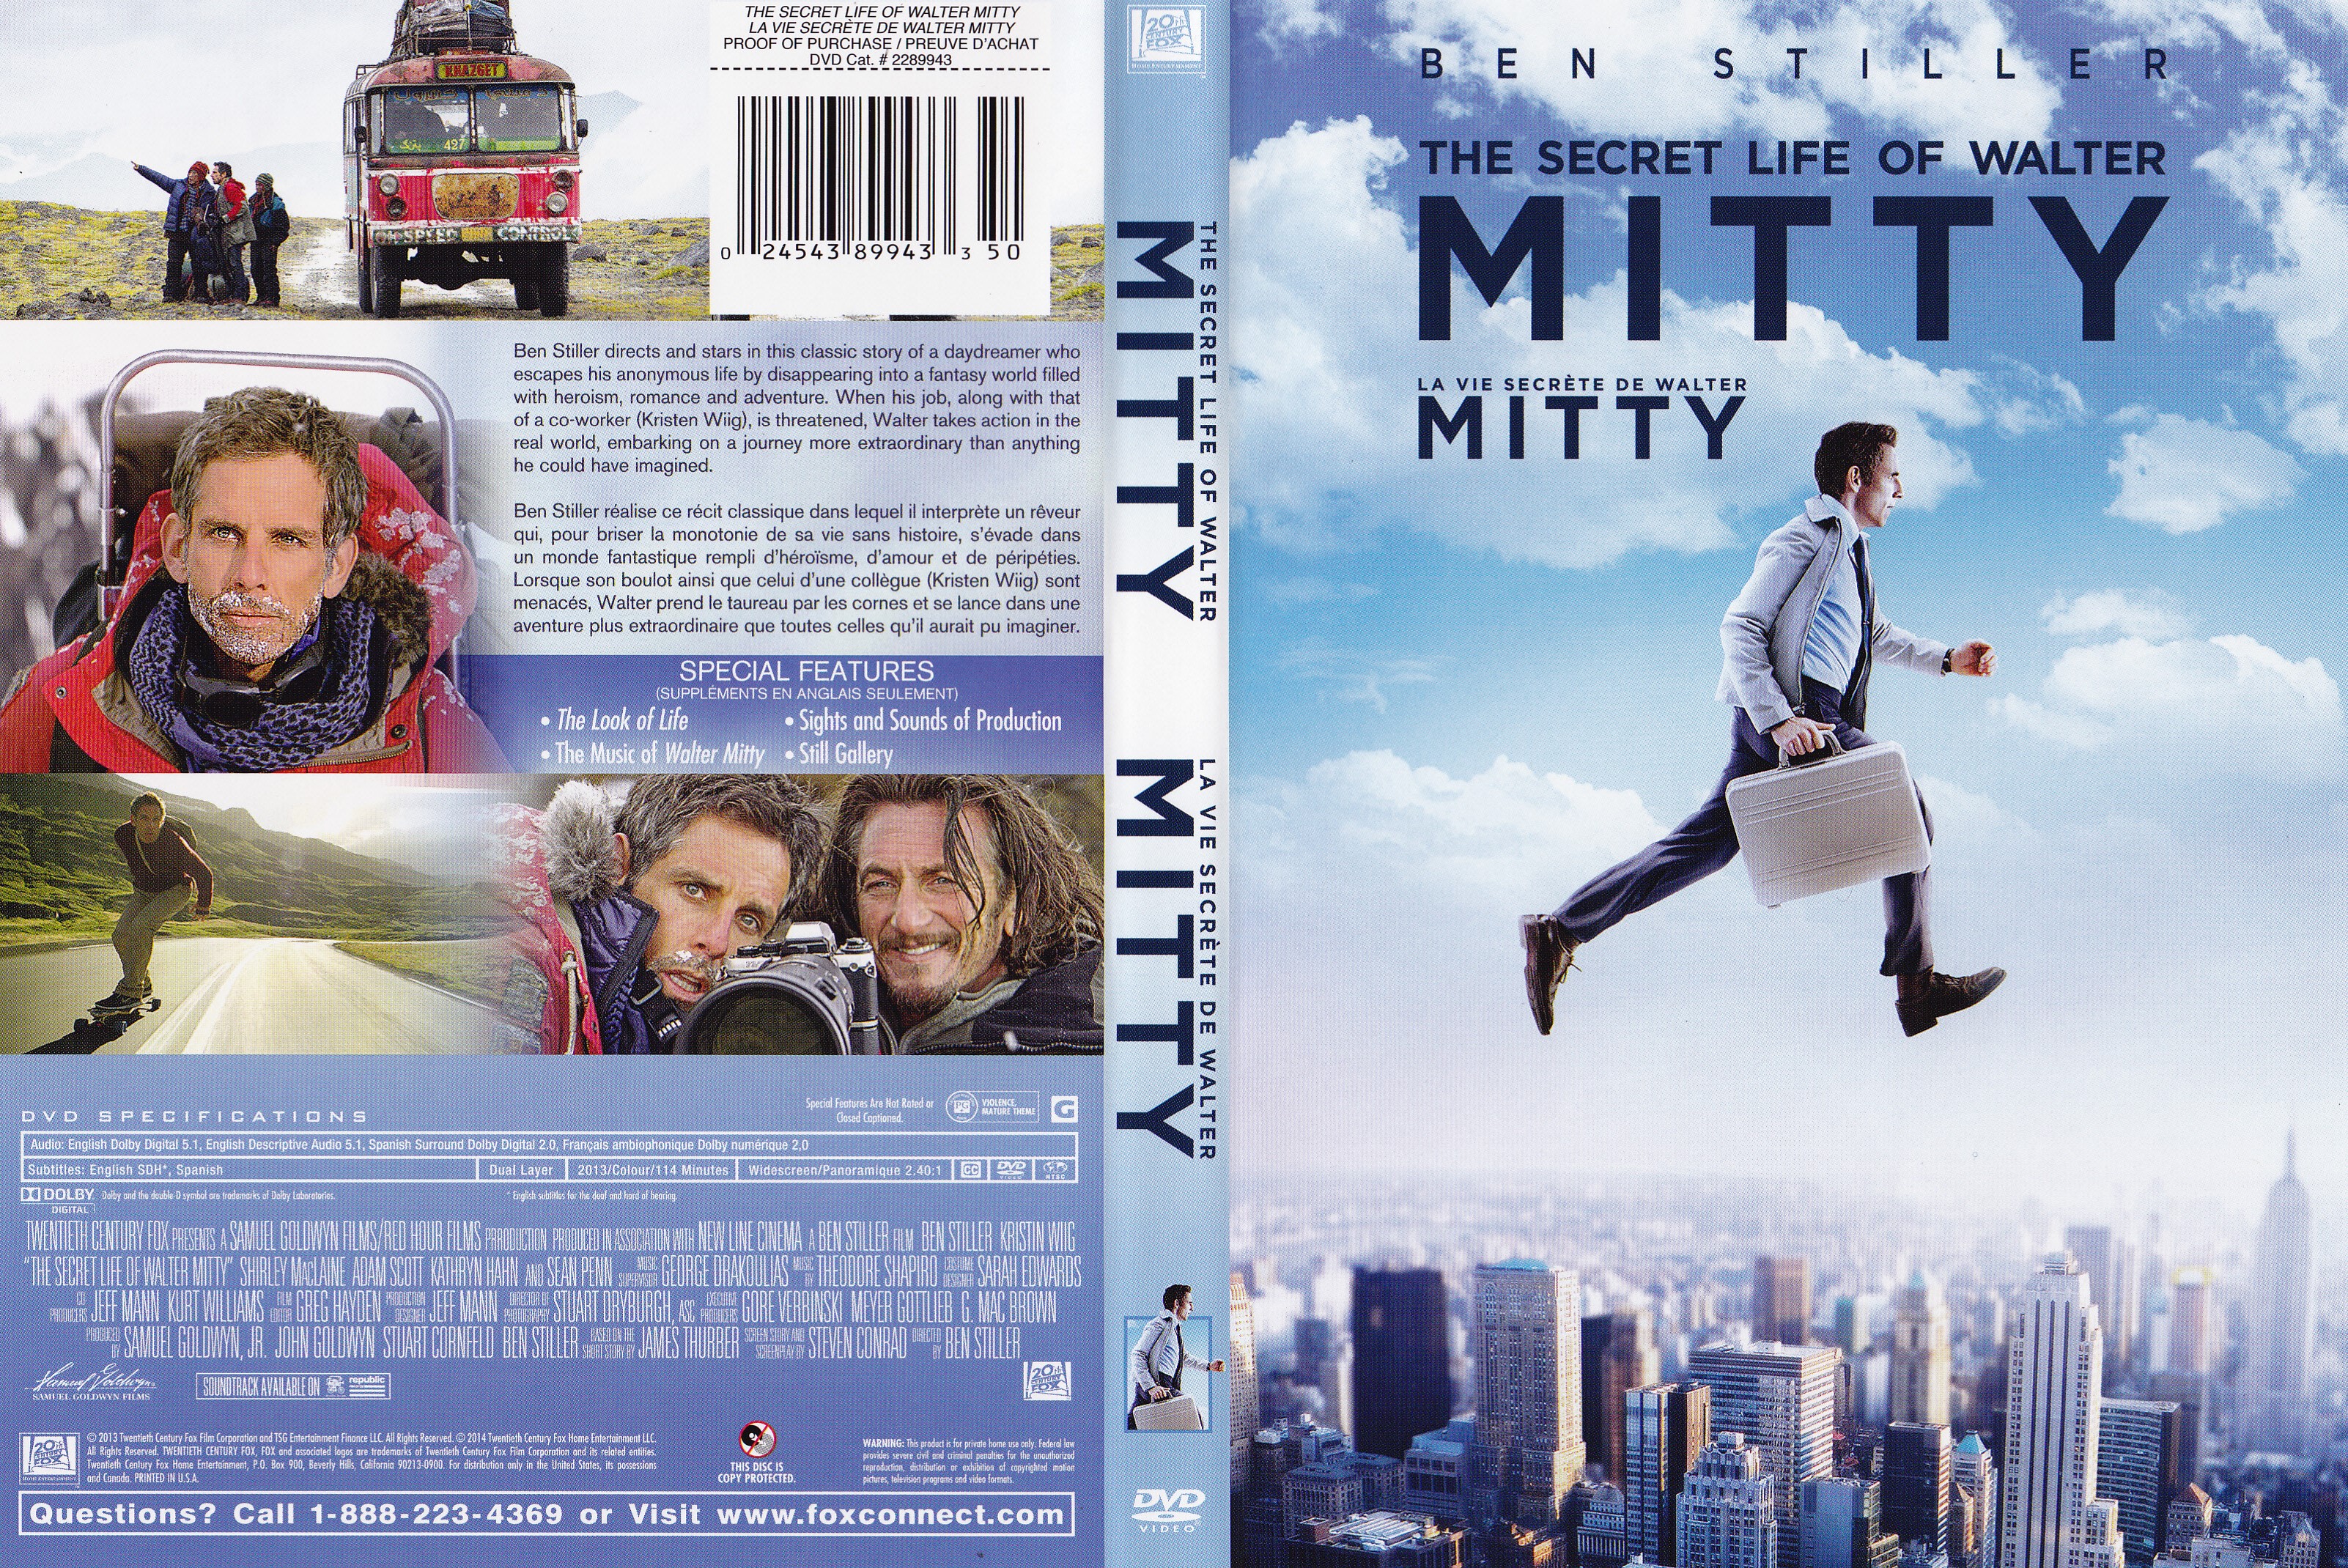 Jaquette DVD La vie secrte de Walter Mitty - The secret life of walter mitty  (Canadienne)